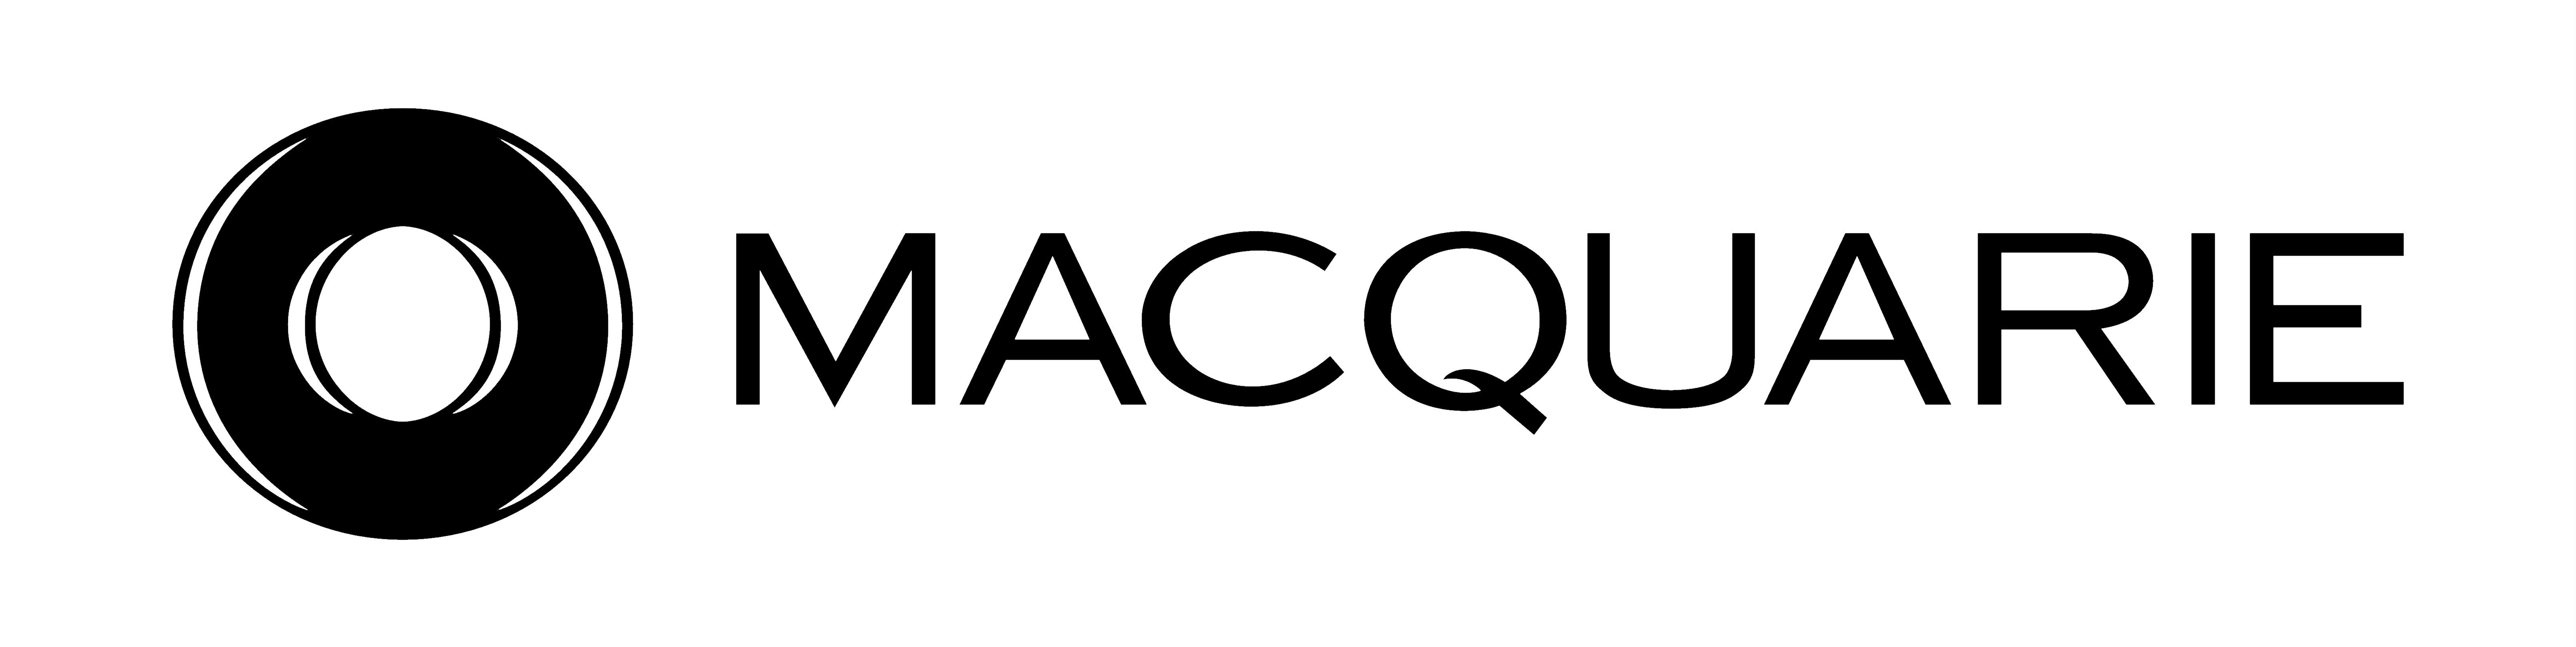 Macquarie Logo   Macquarie Logo Vector Png - Adra Vector, Transparent background PNG HD thumbnail